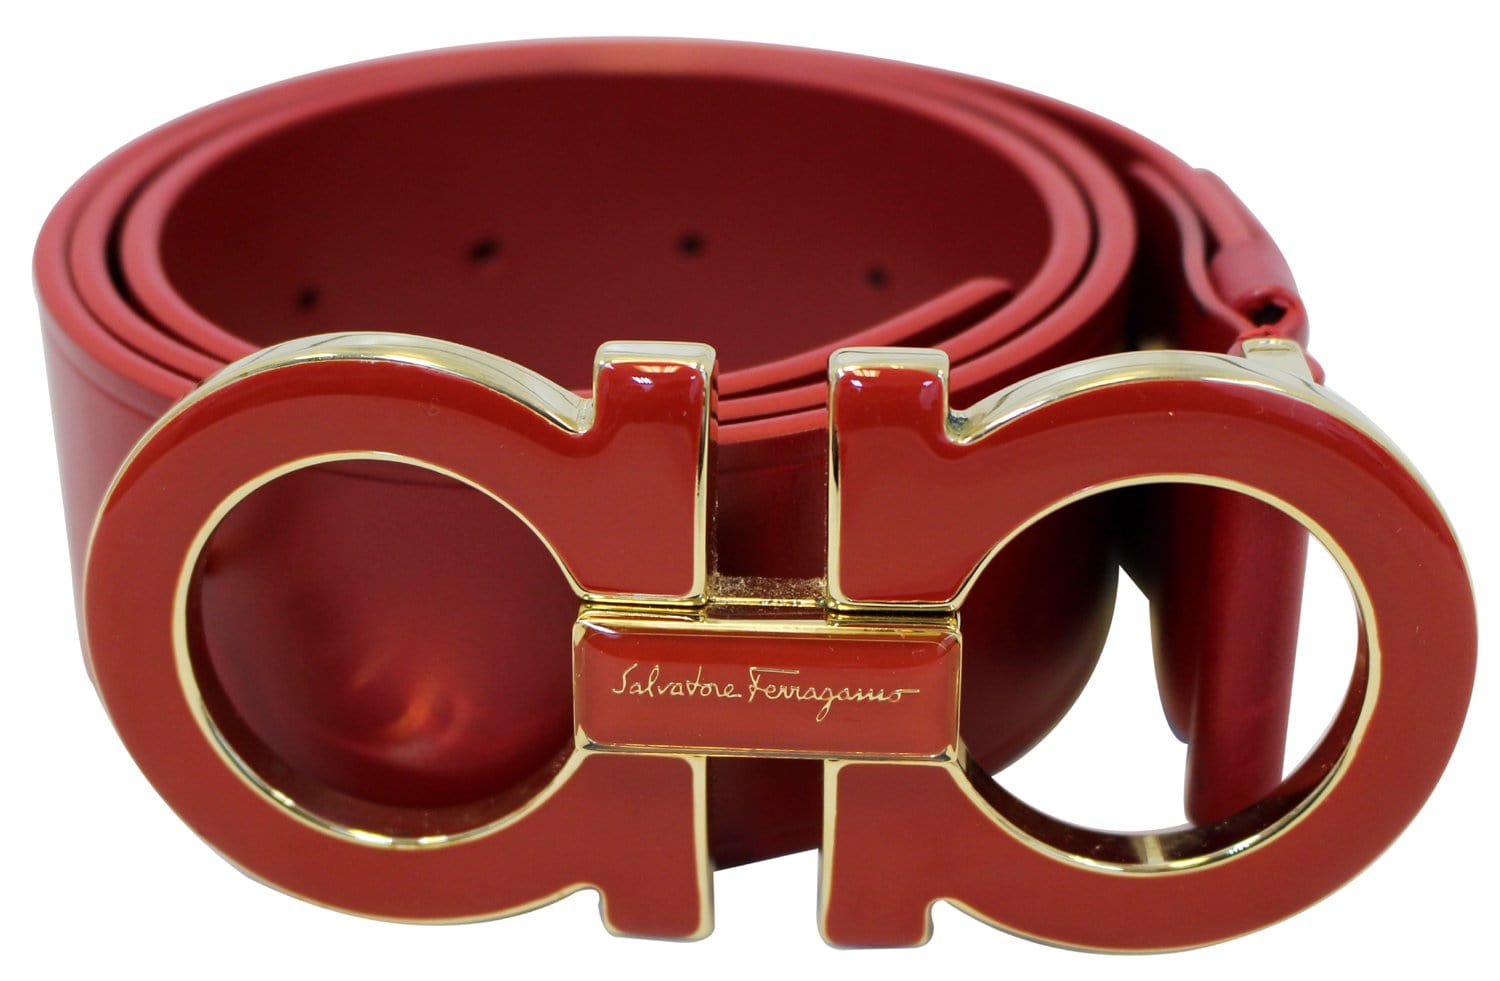 Salvatore Ferragamo Belt Gancini Leather/Wood Red Men's e56031f